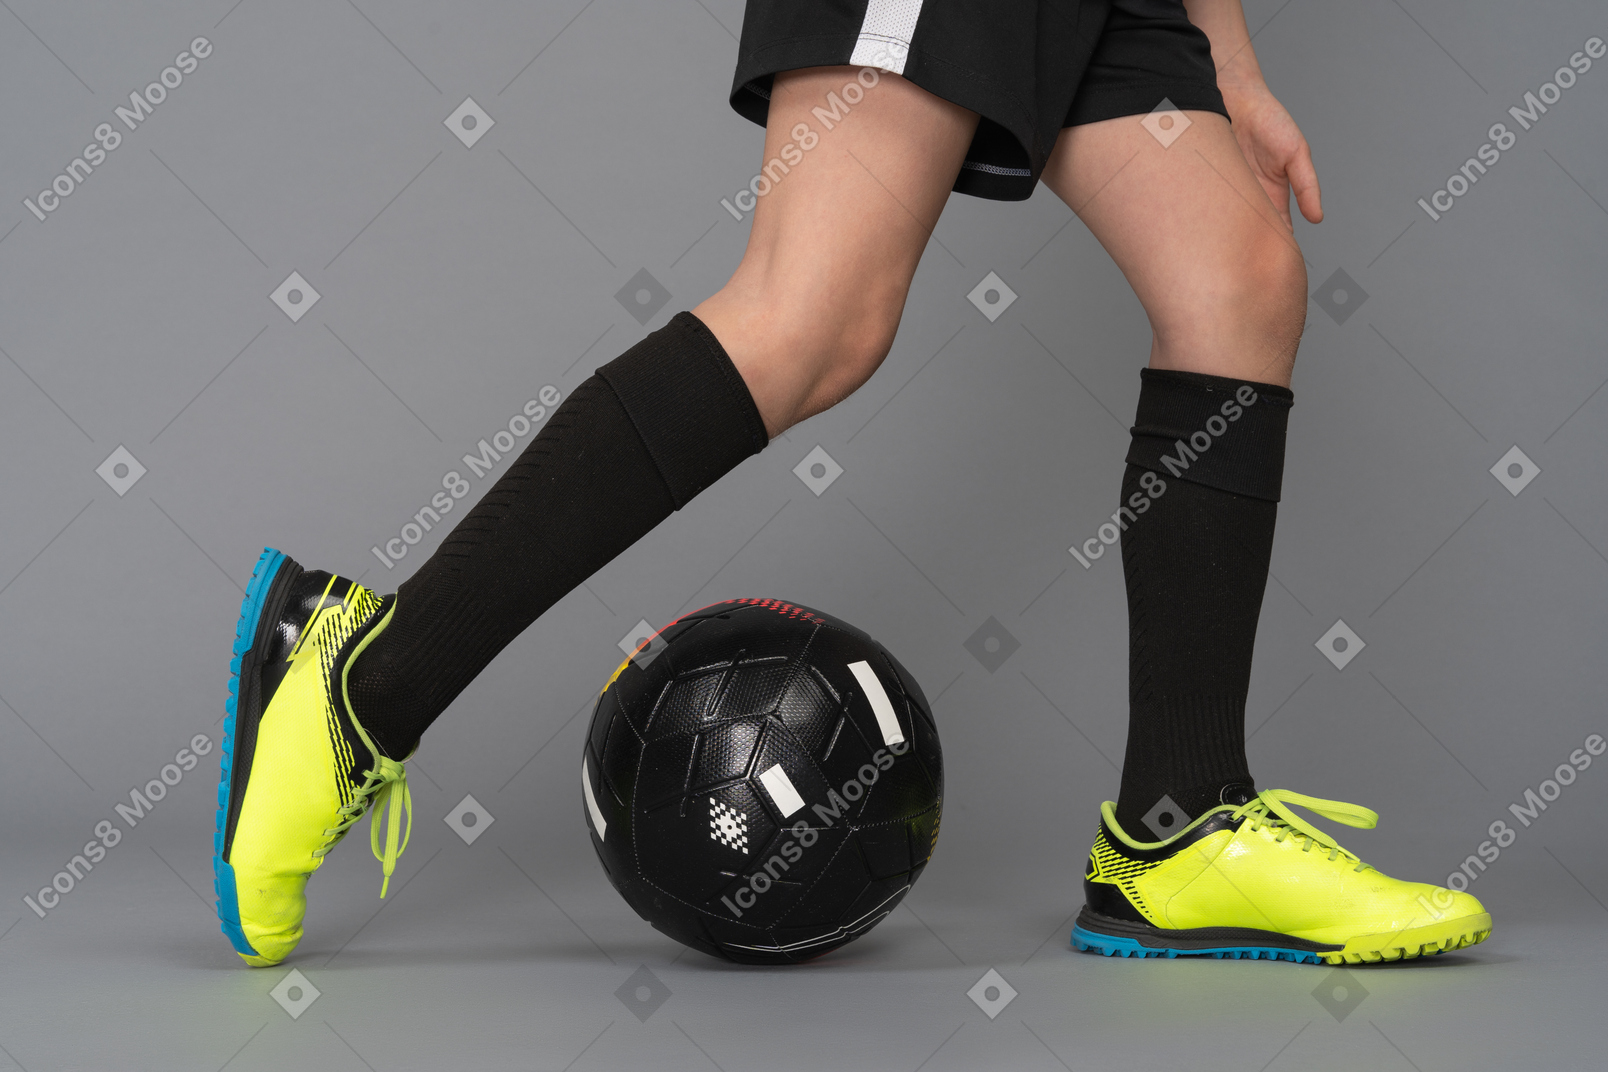 A soccer player is kicking a soccer ball